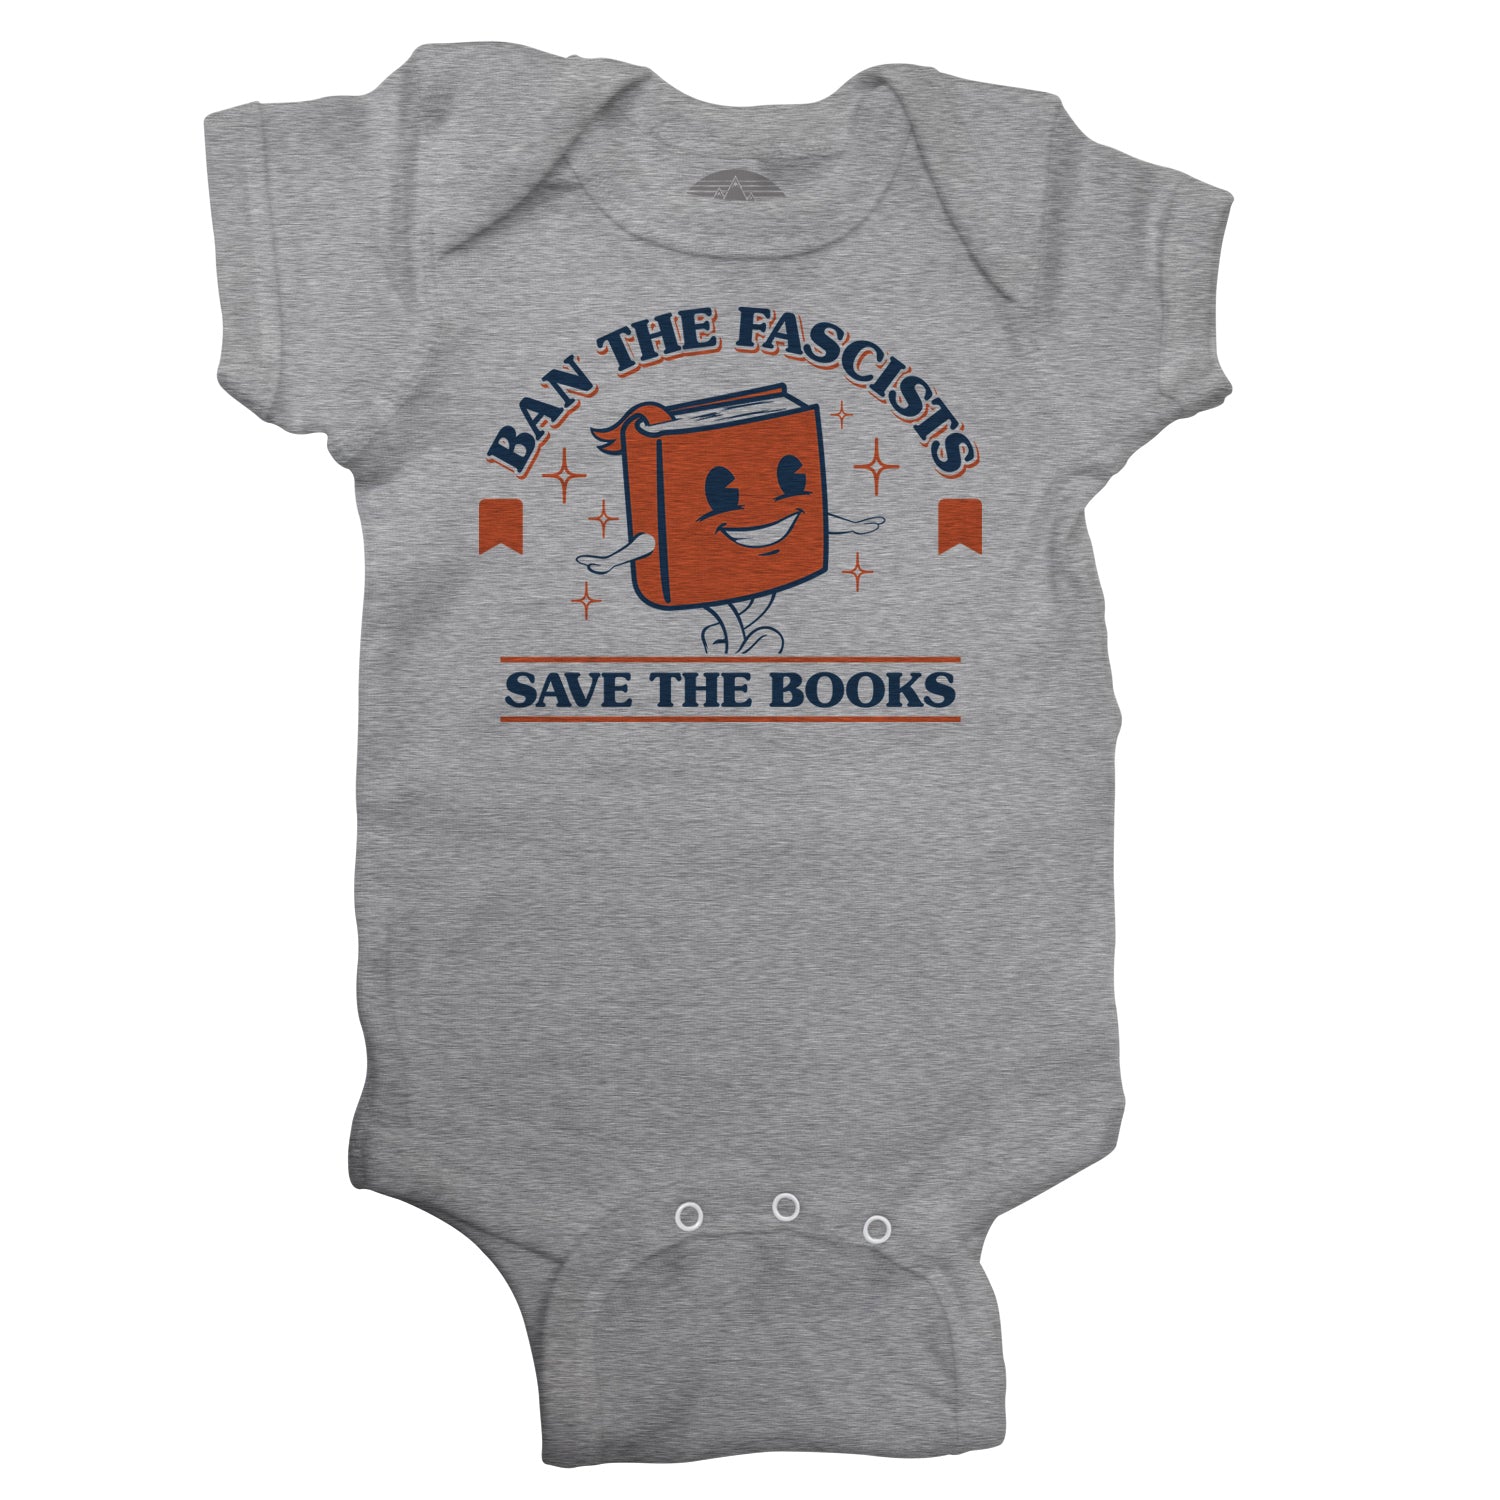 Ban The Fascists Save The Books Infant Bodysuit - Unisex Fit